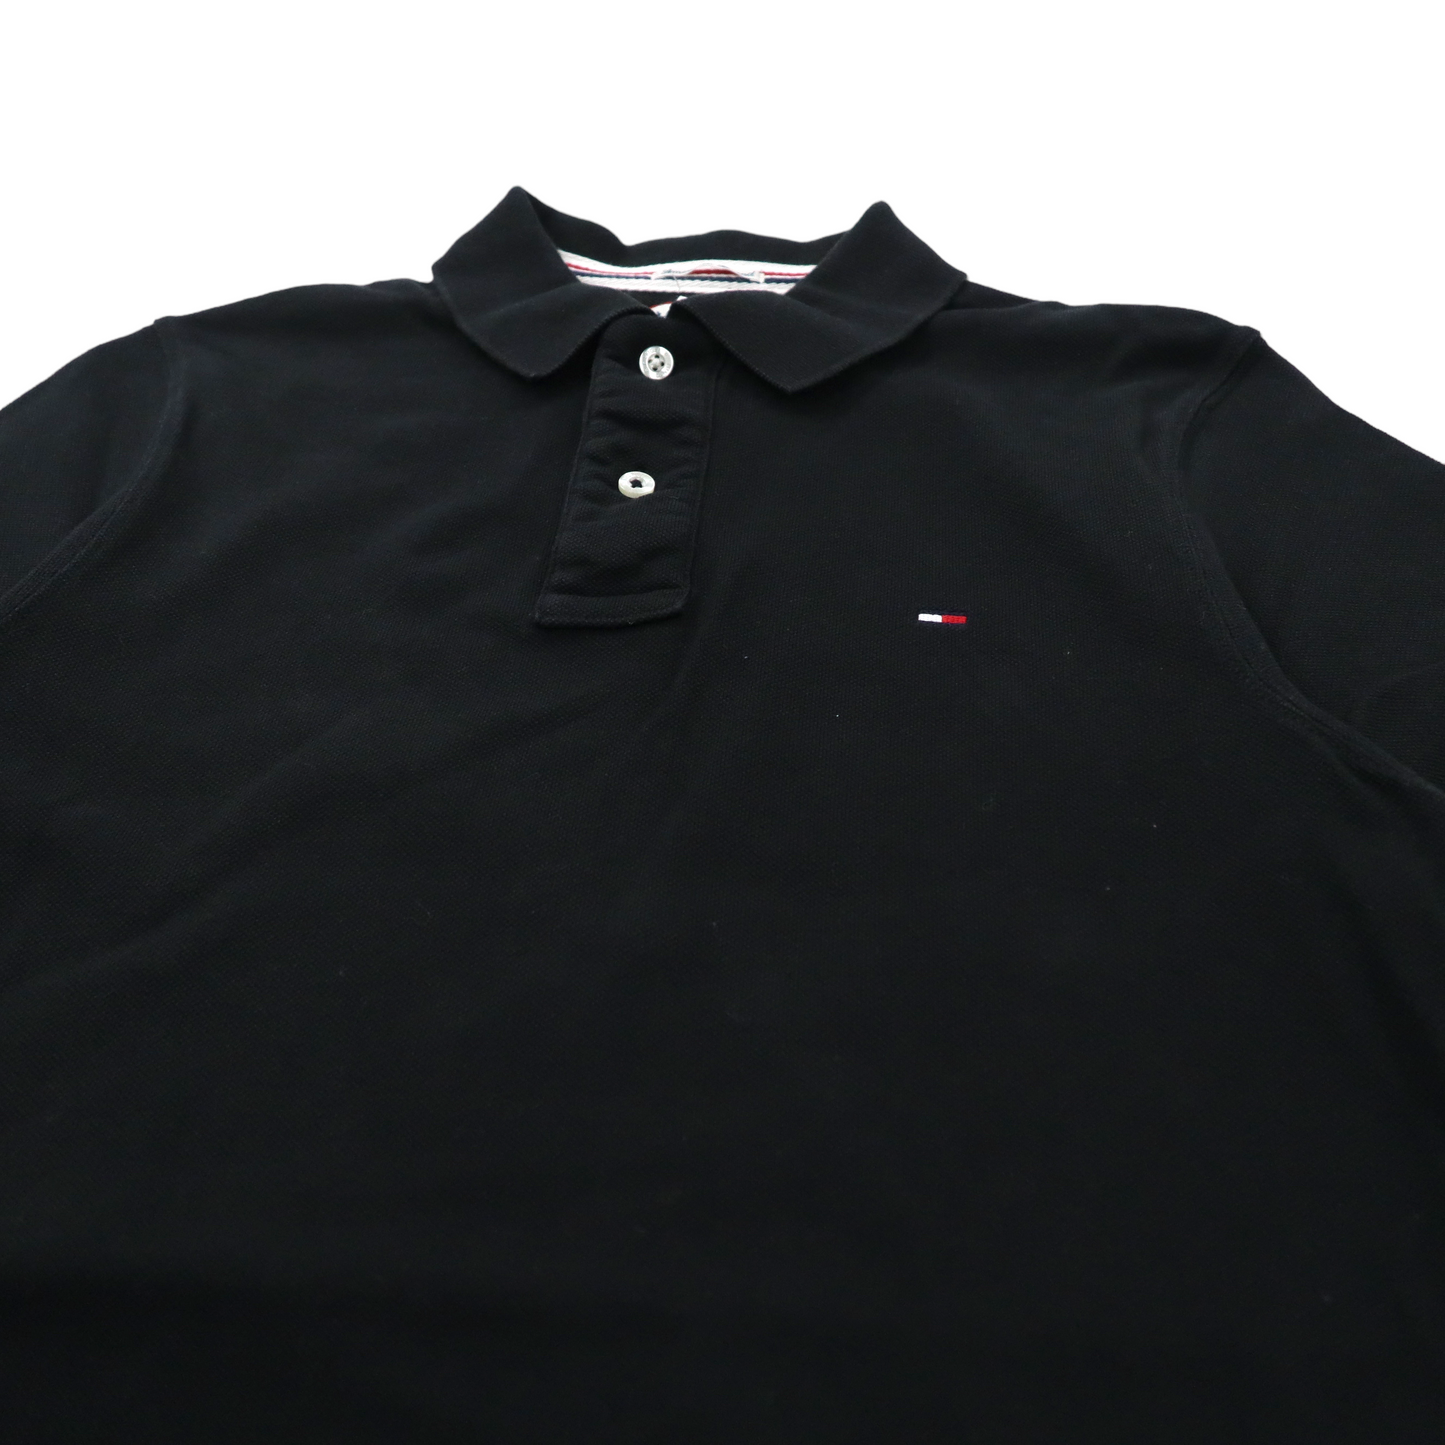 HILFIGER DENIM ポロシャツ S ブラック コットン American Brand